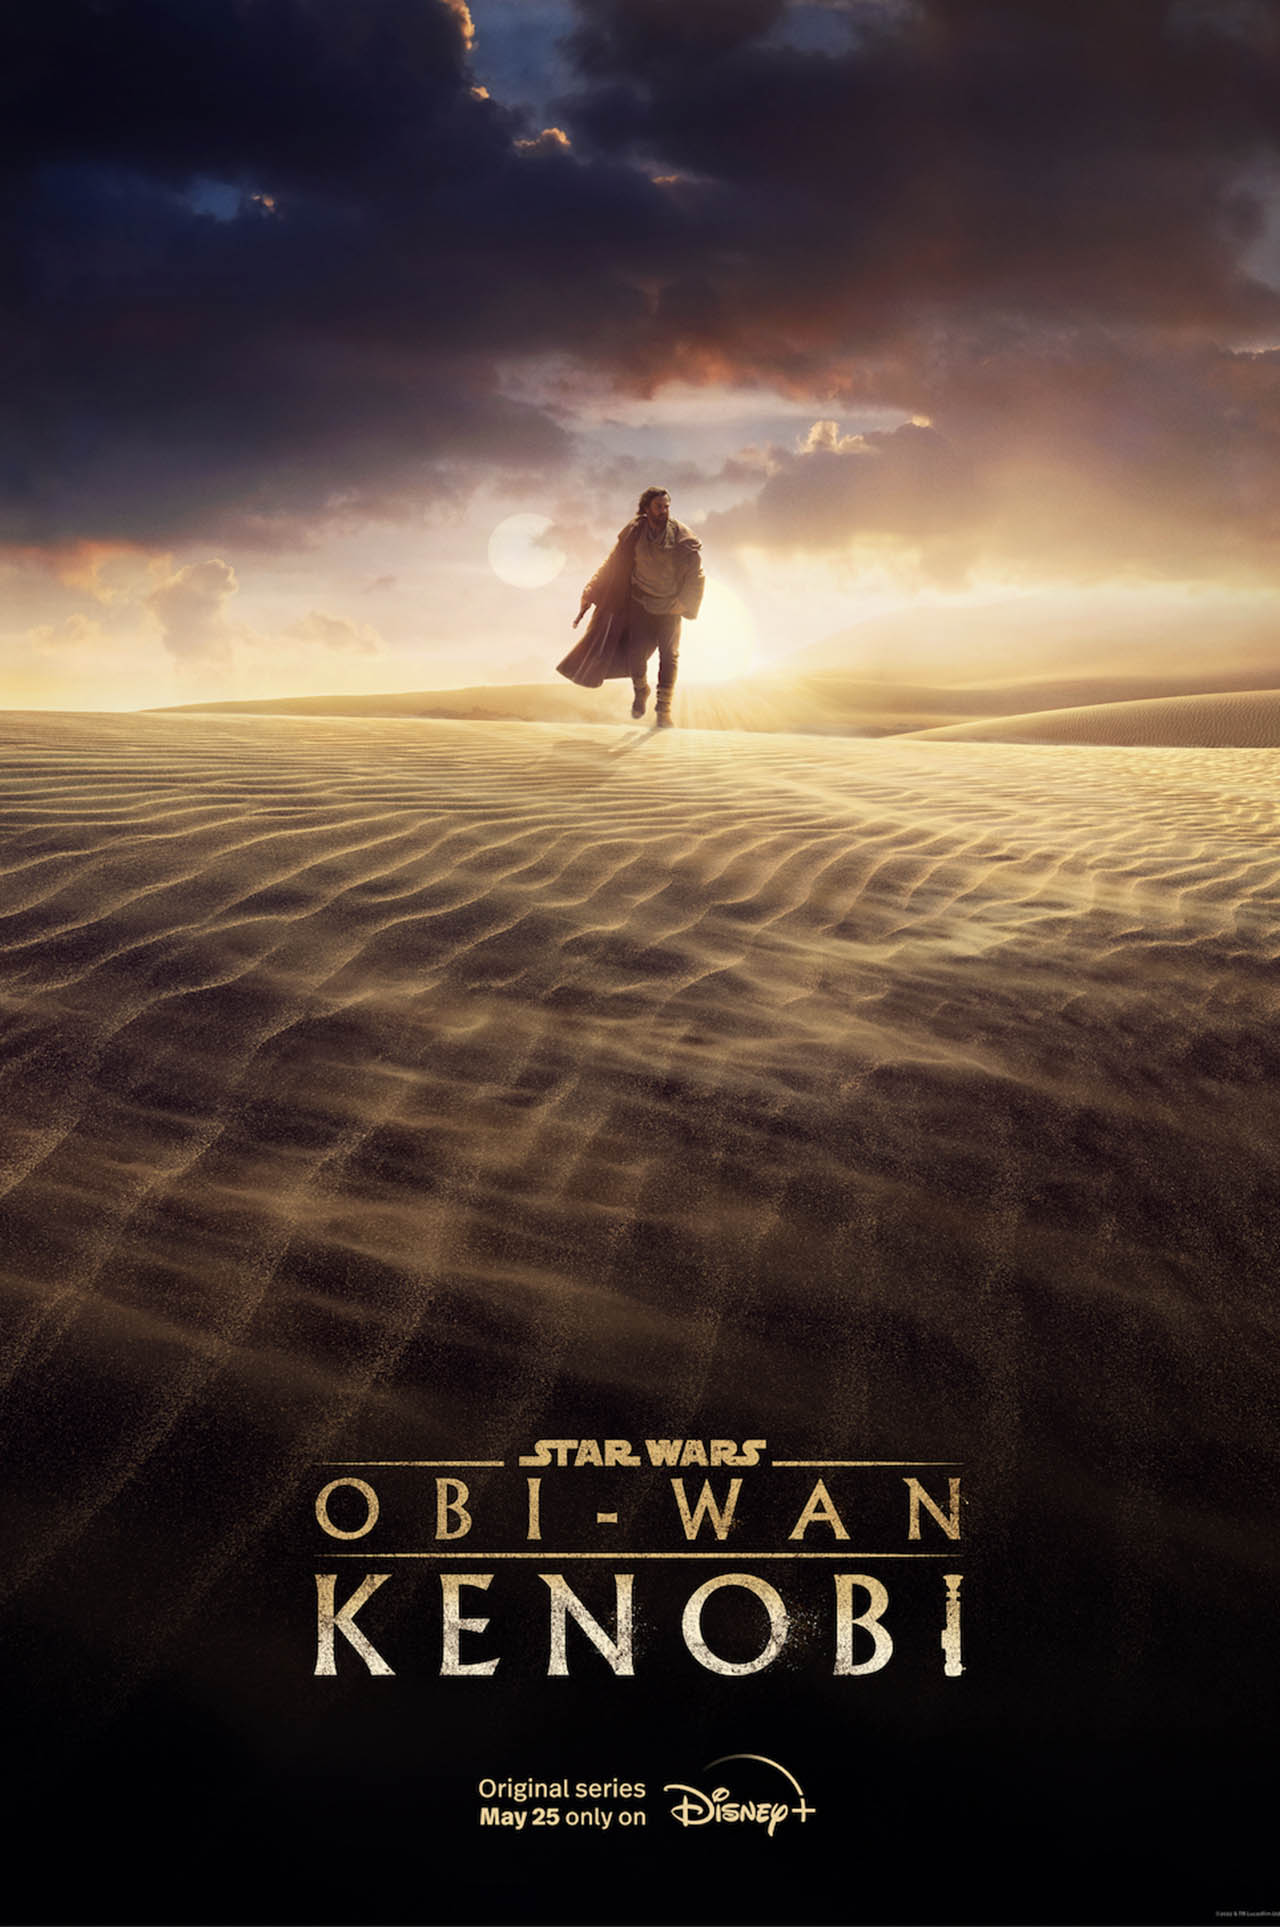 Star Wars - Obi-Wan Kenobi Series poster